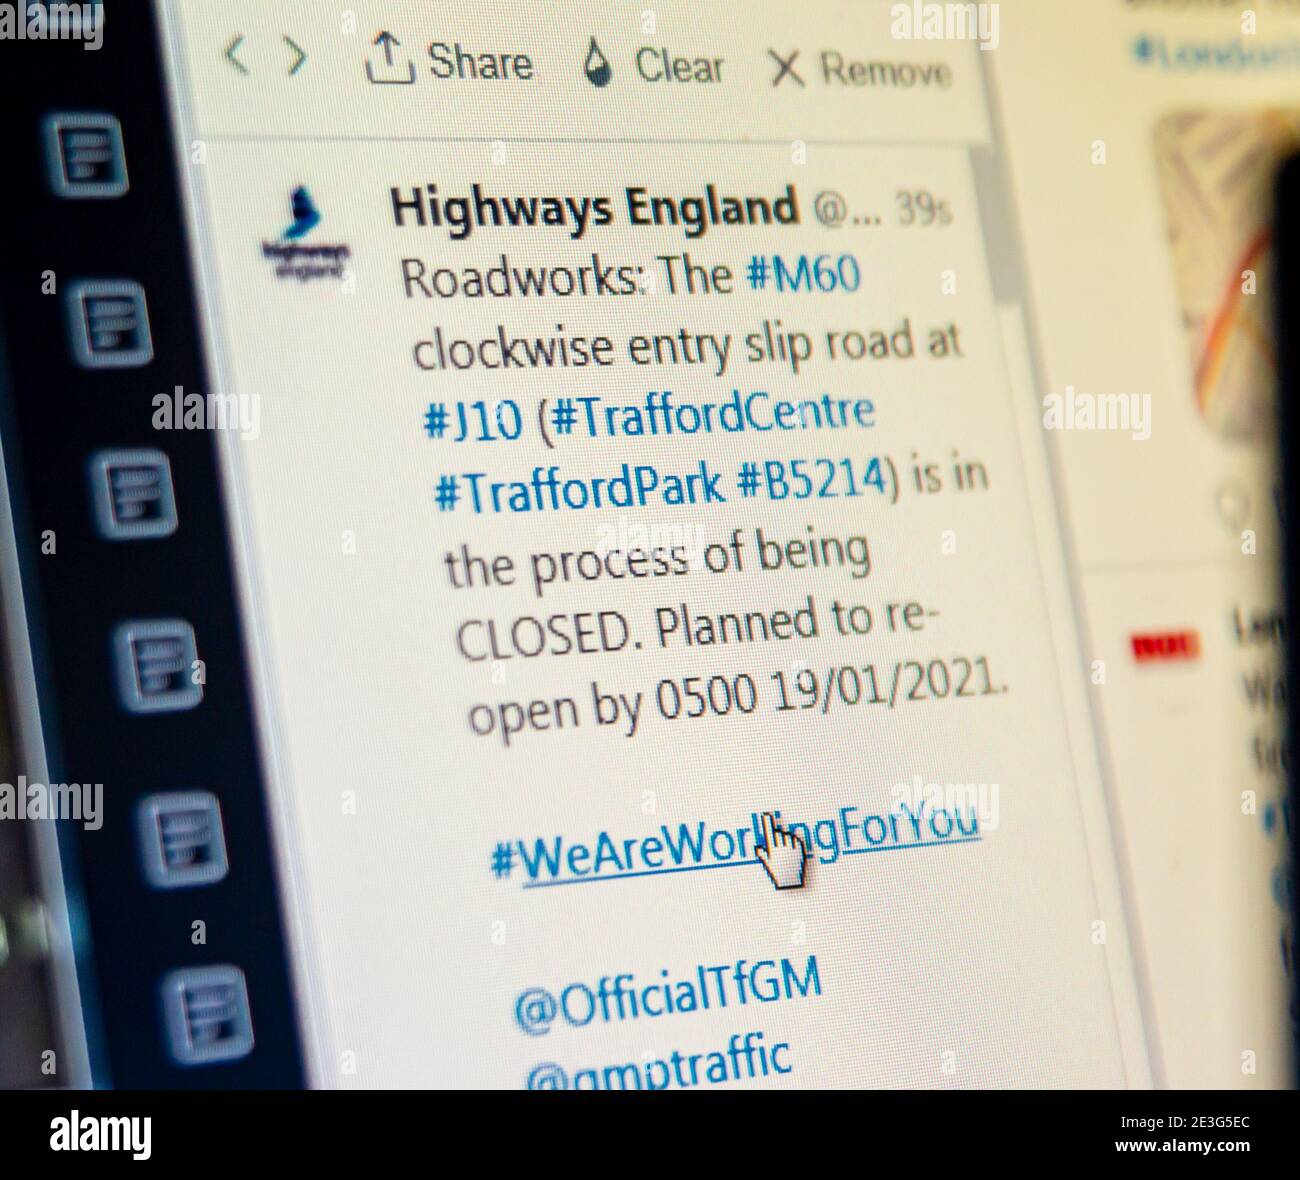 Highways England motorway roadworks closure announcement on Twitter, social media Stock Photo